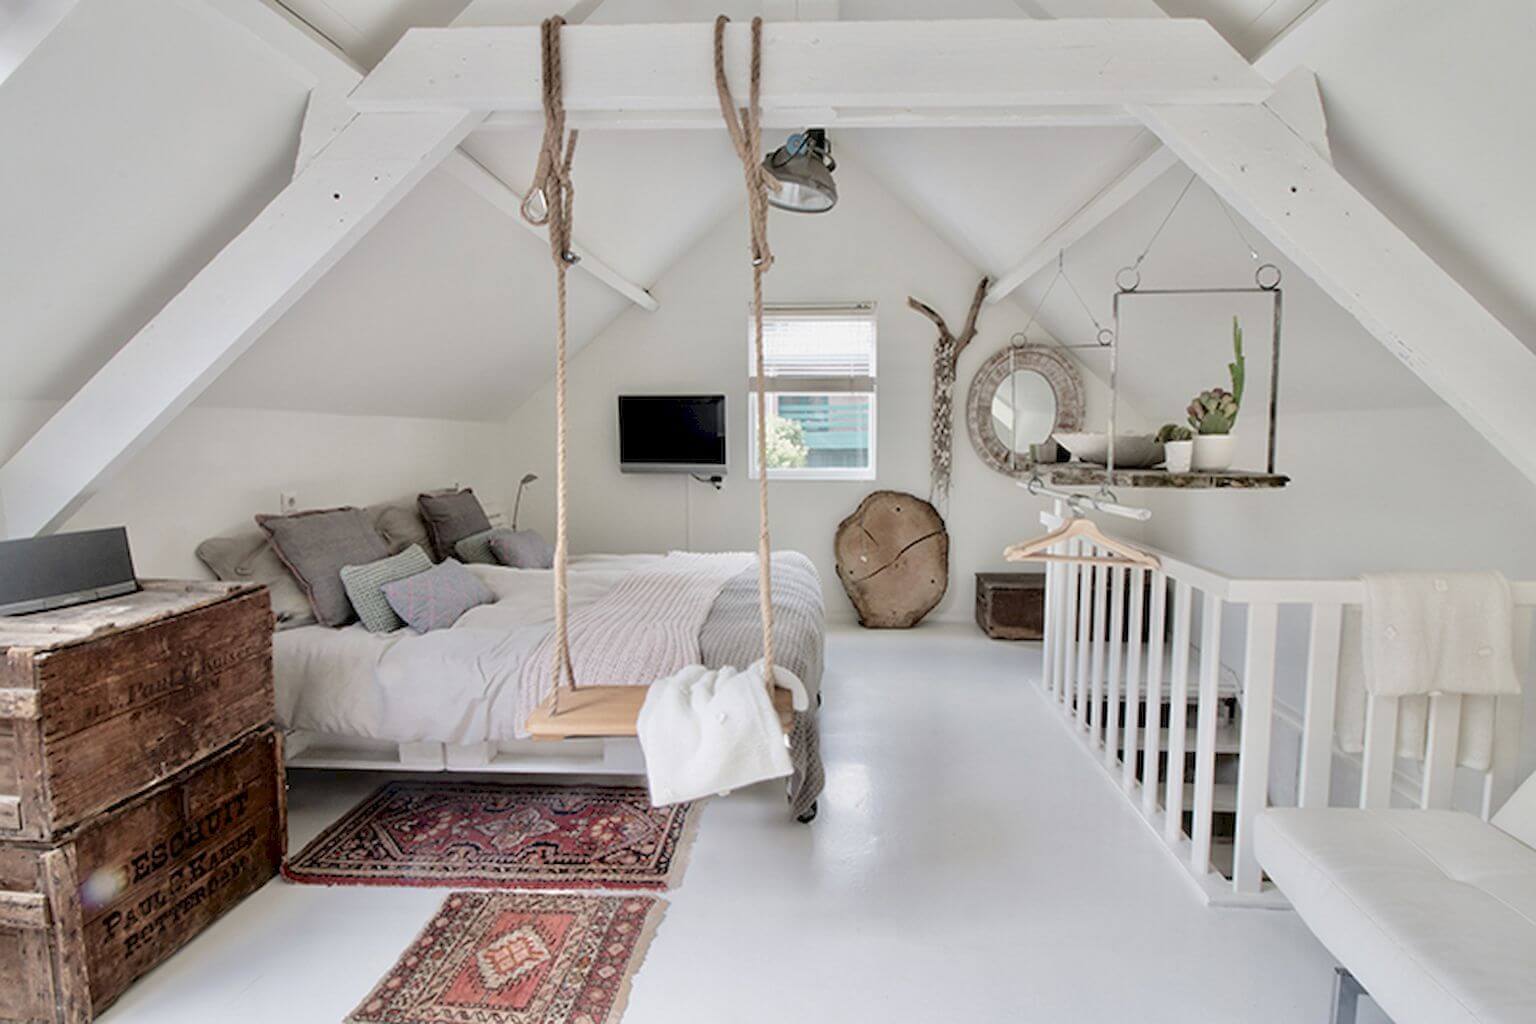 Great attic bedroom